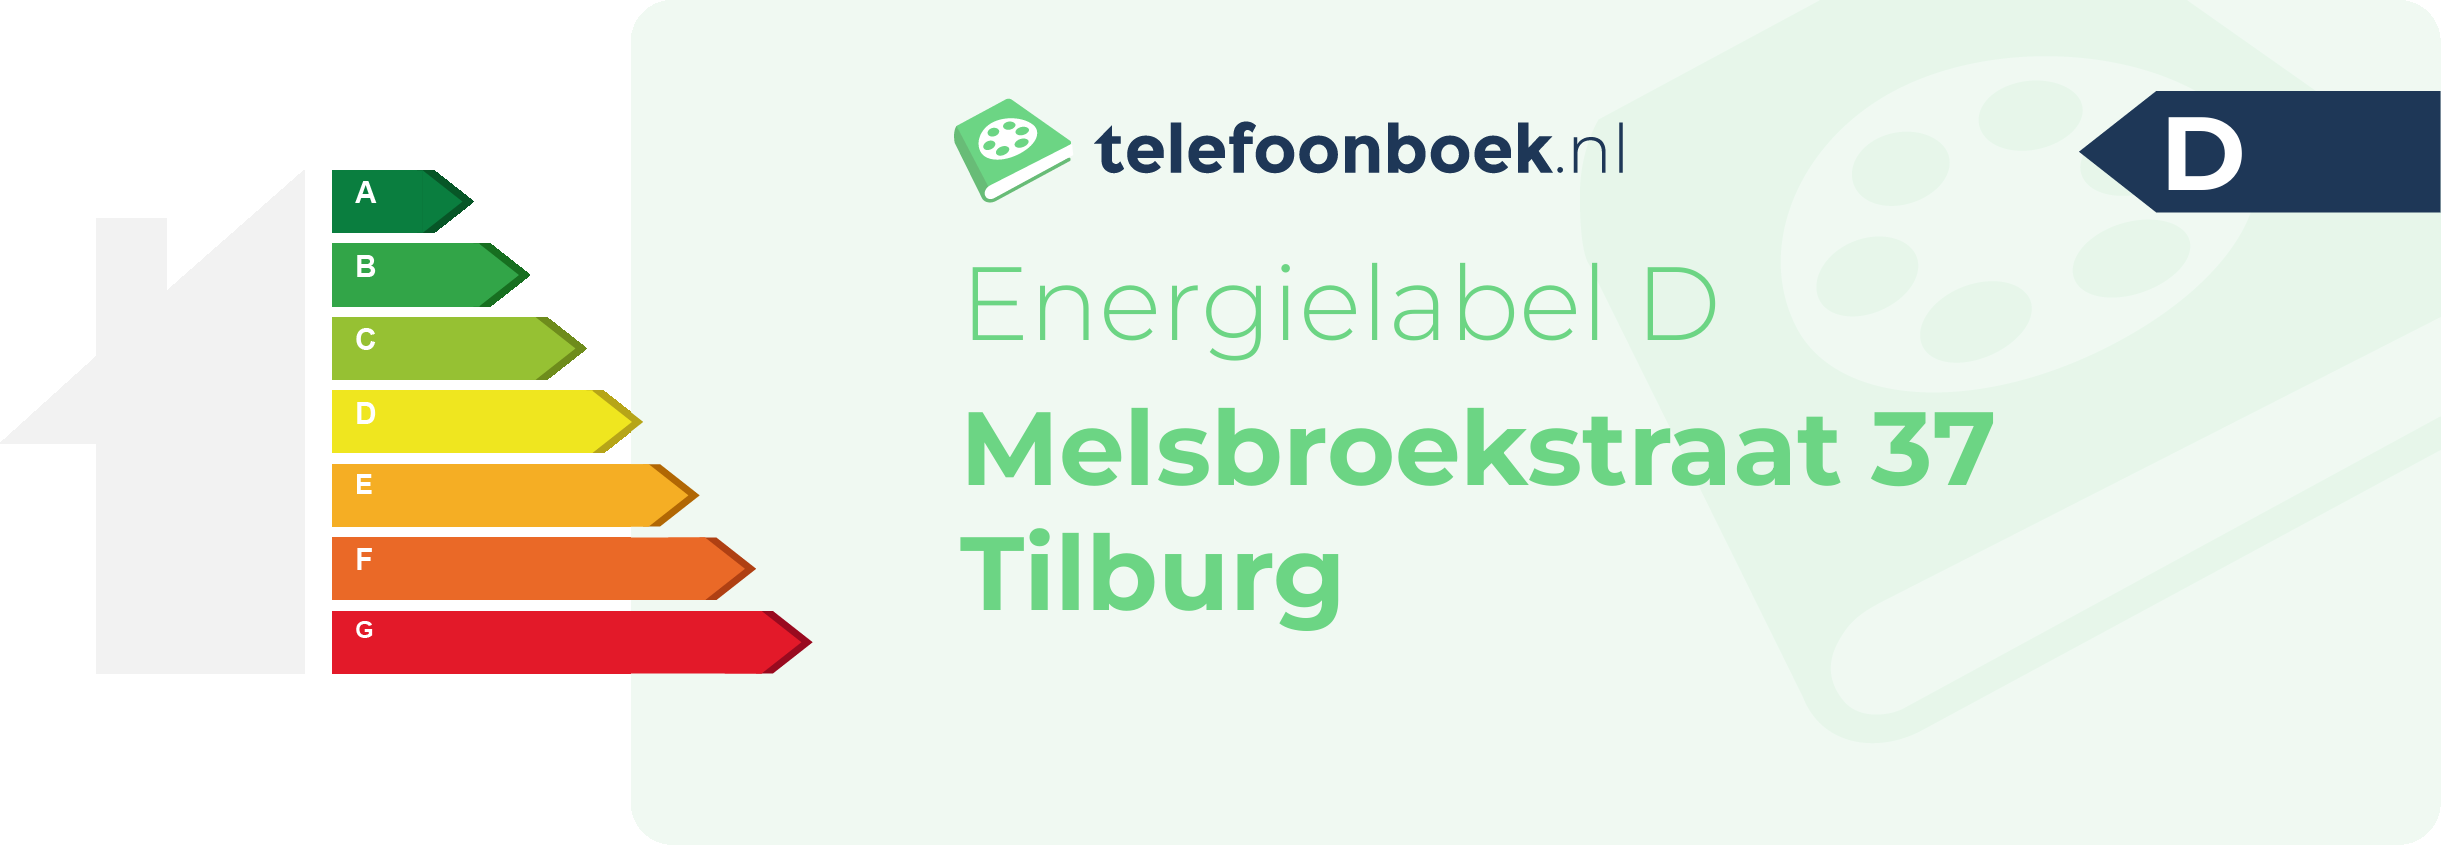 Energielabel Melsbroekstraat 37 Tilburg